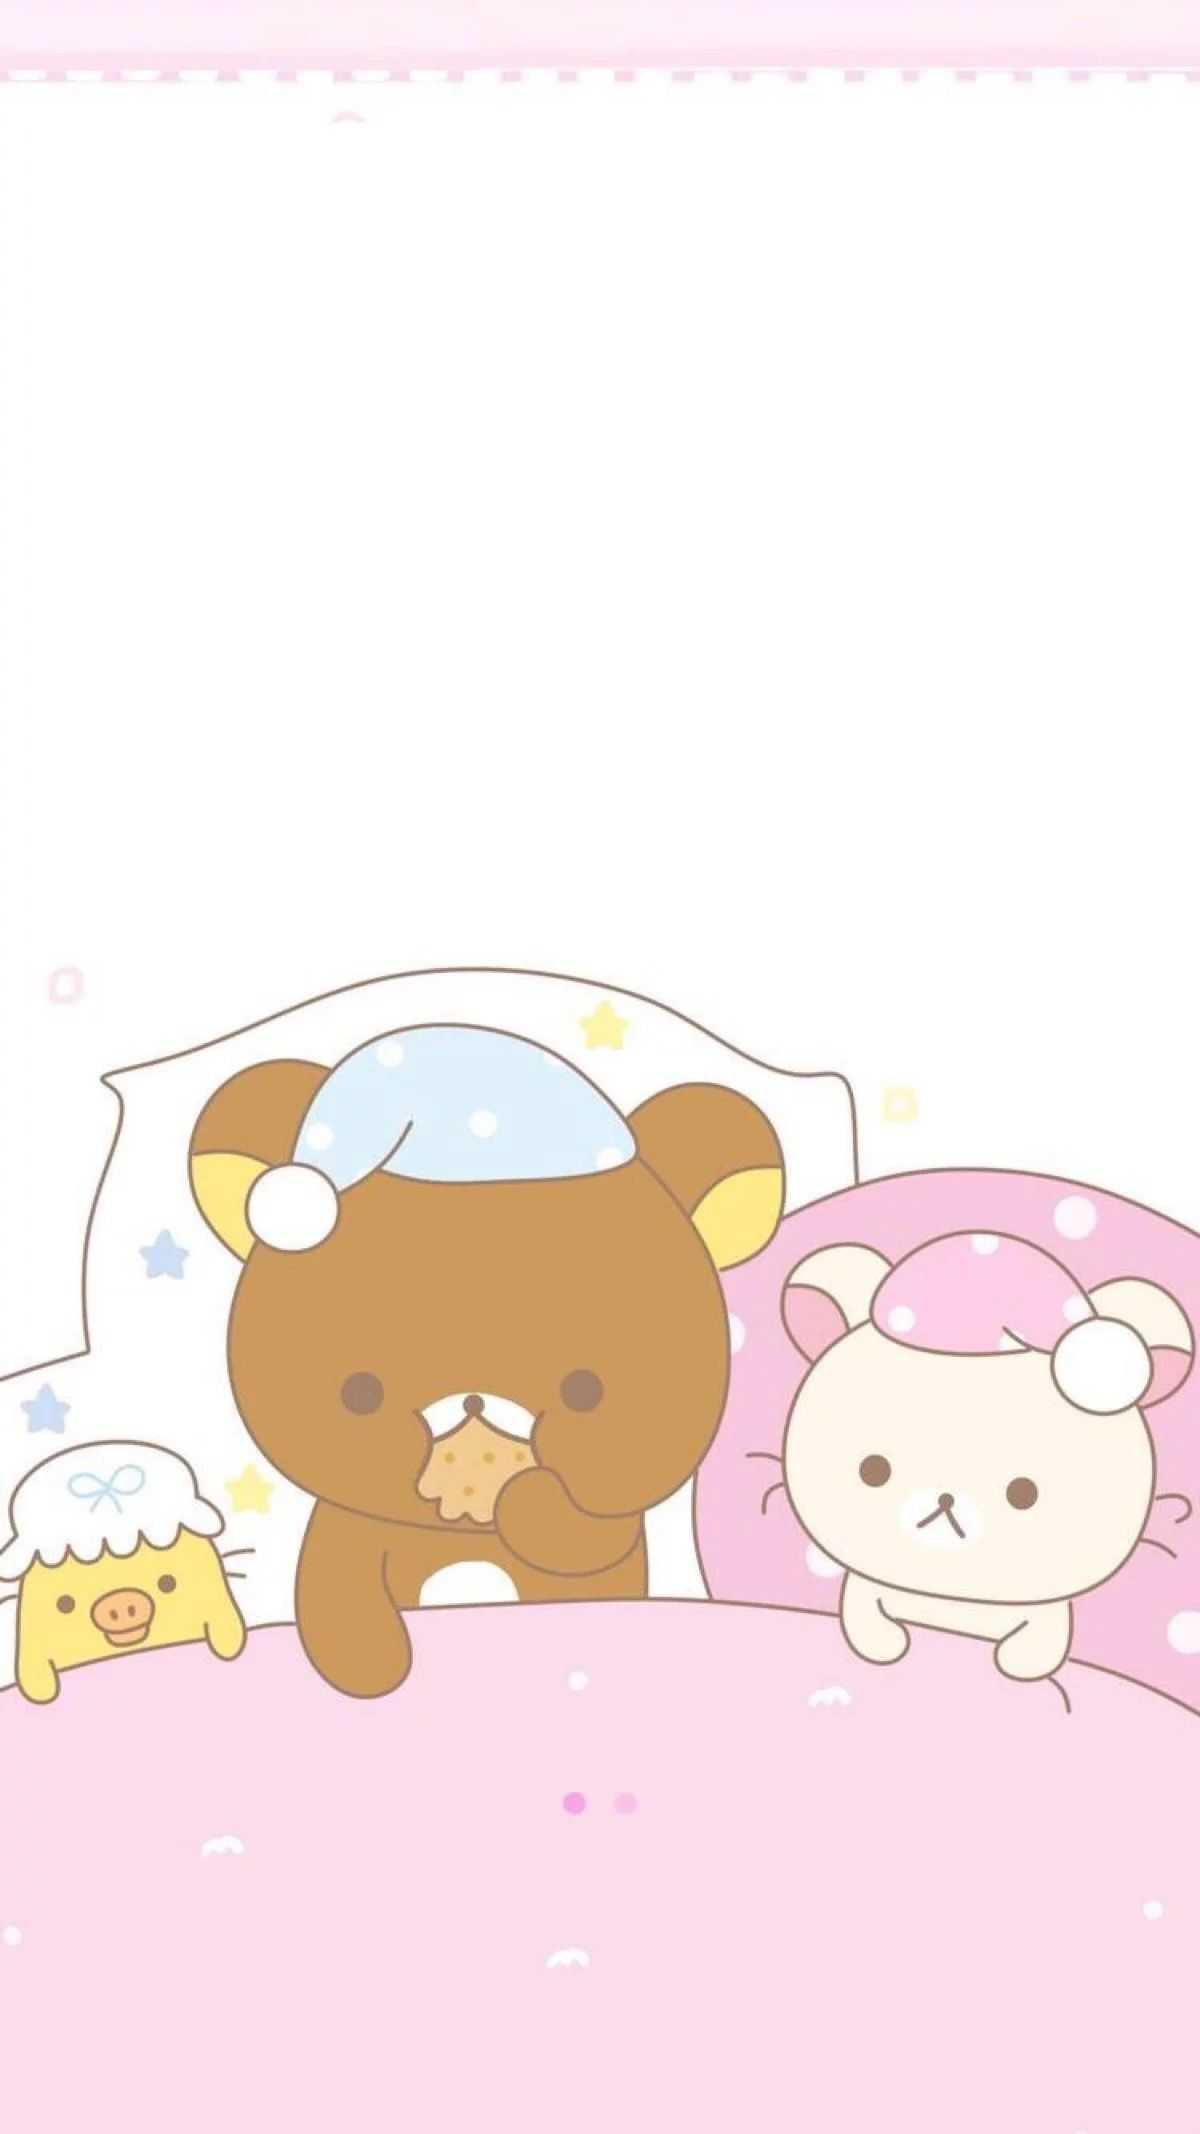 A cute cartoon bear and cat are in bed - Kawaii